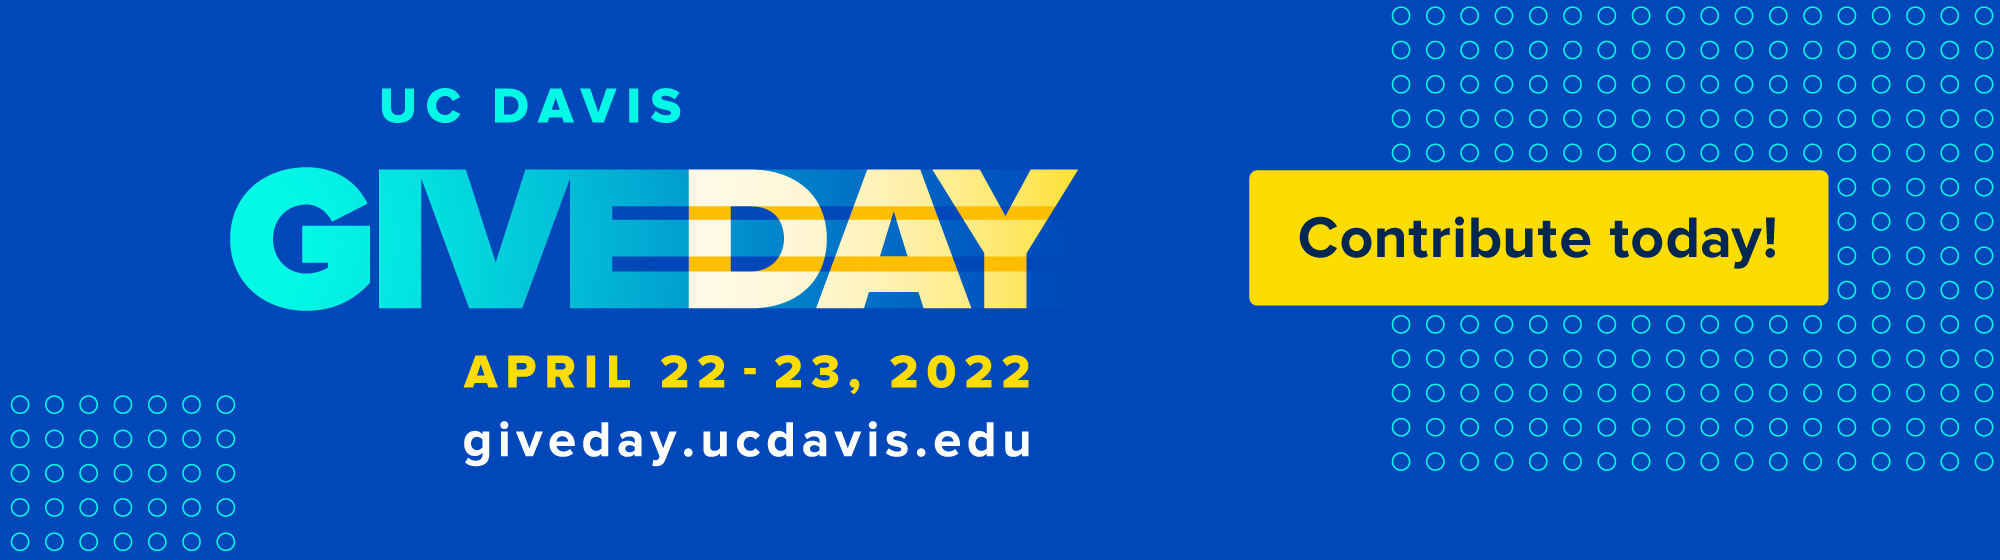 UC Davis Health Give Day 2022